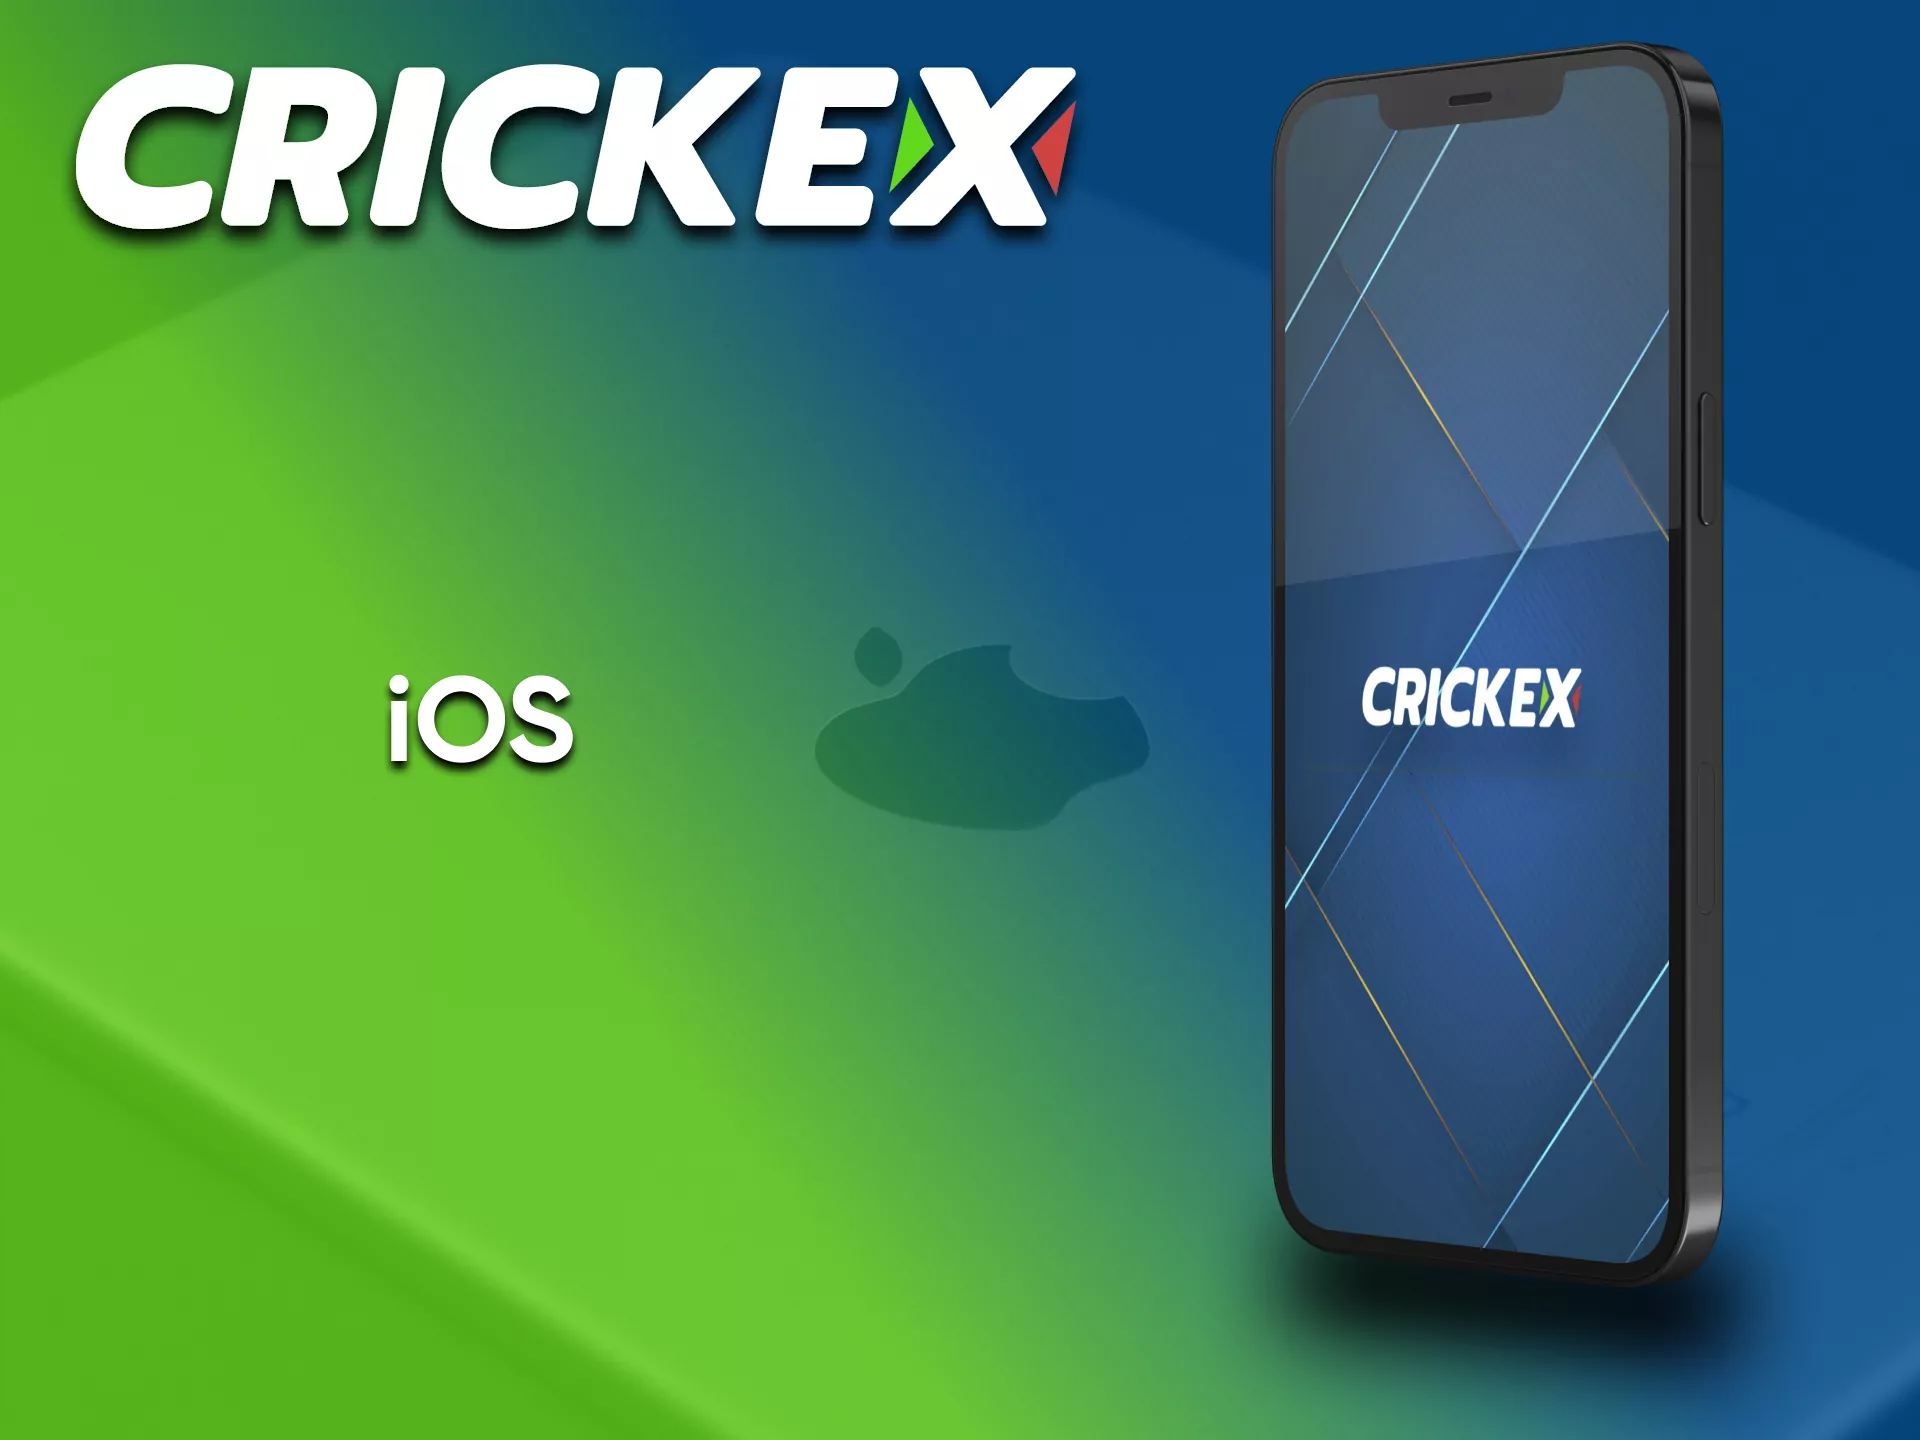 The Crickex casino has an iOS app for your device.